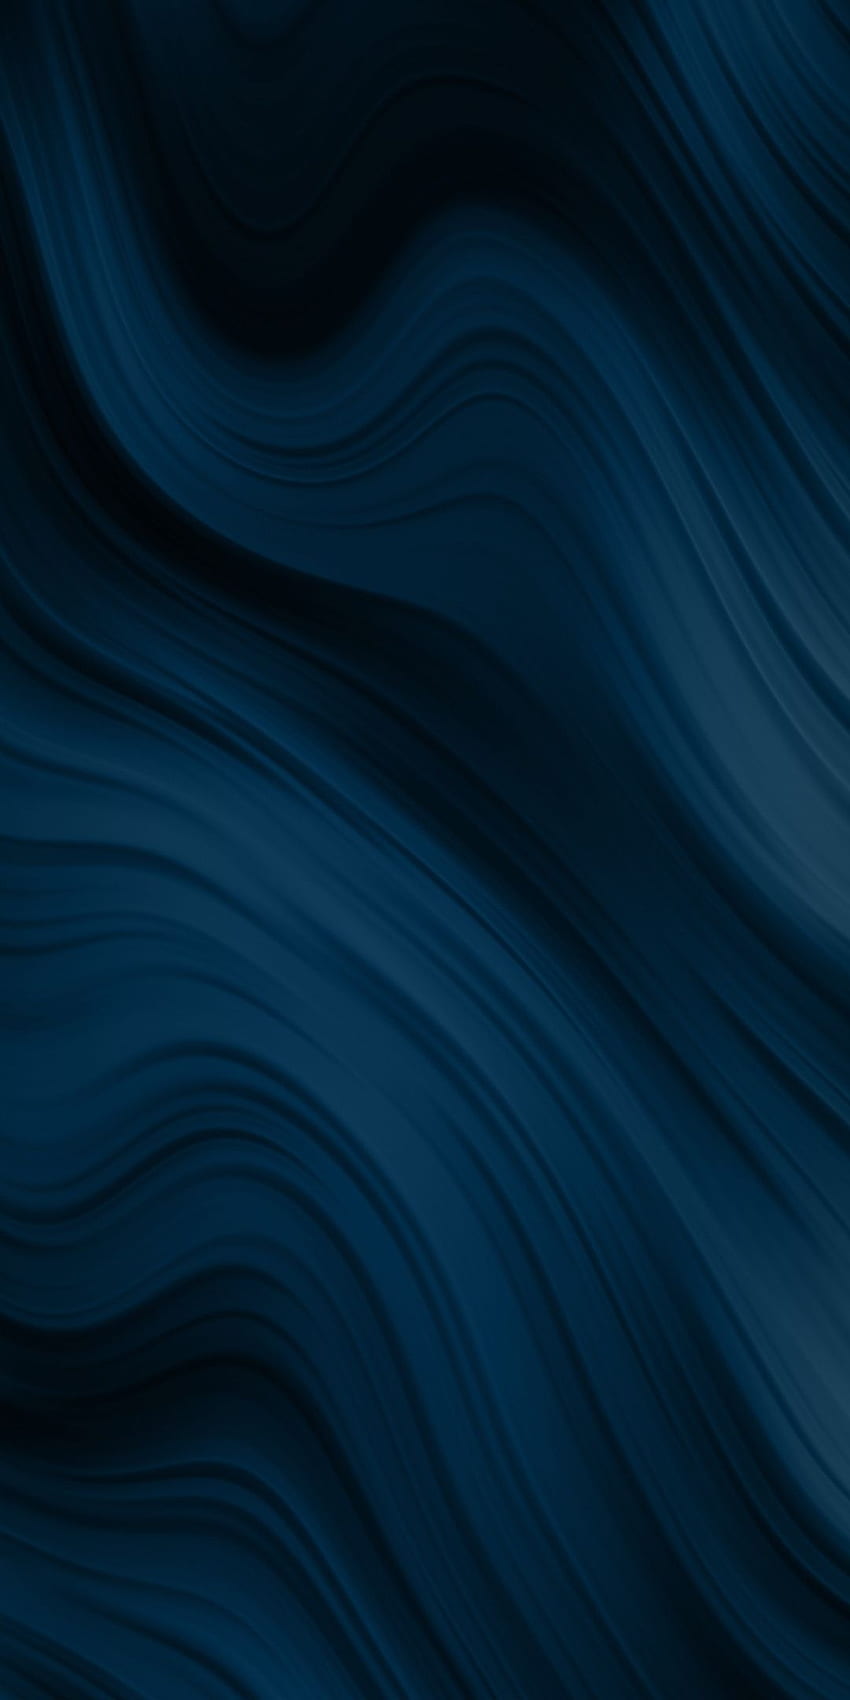 Líneas oscuras y curvas, ondas, abstracto,. iPhone abstracto, iPhone Ombre, textura iPhone, azul oscuro Ombre fondo de pantalla del teléfono